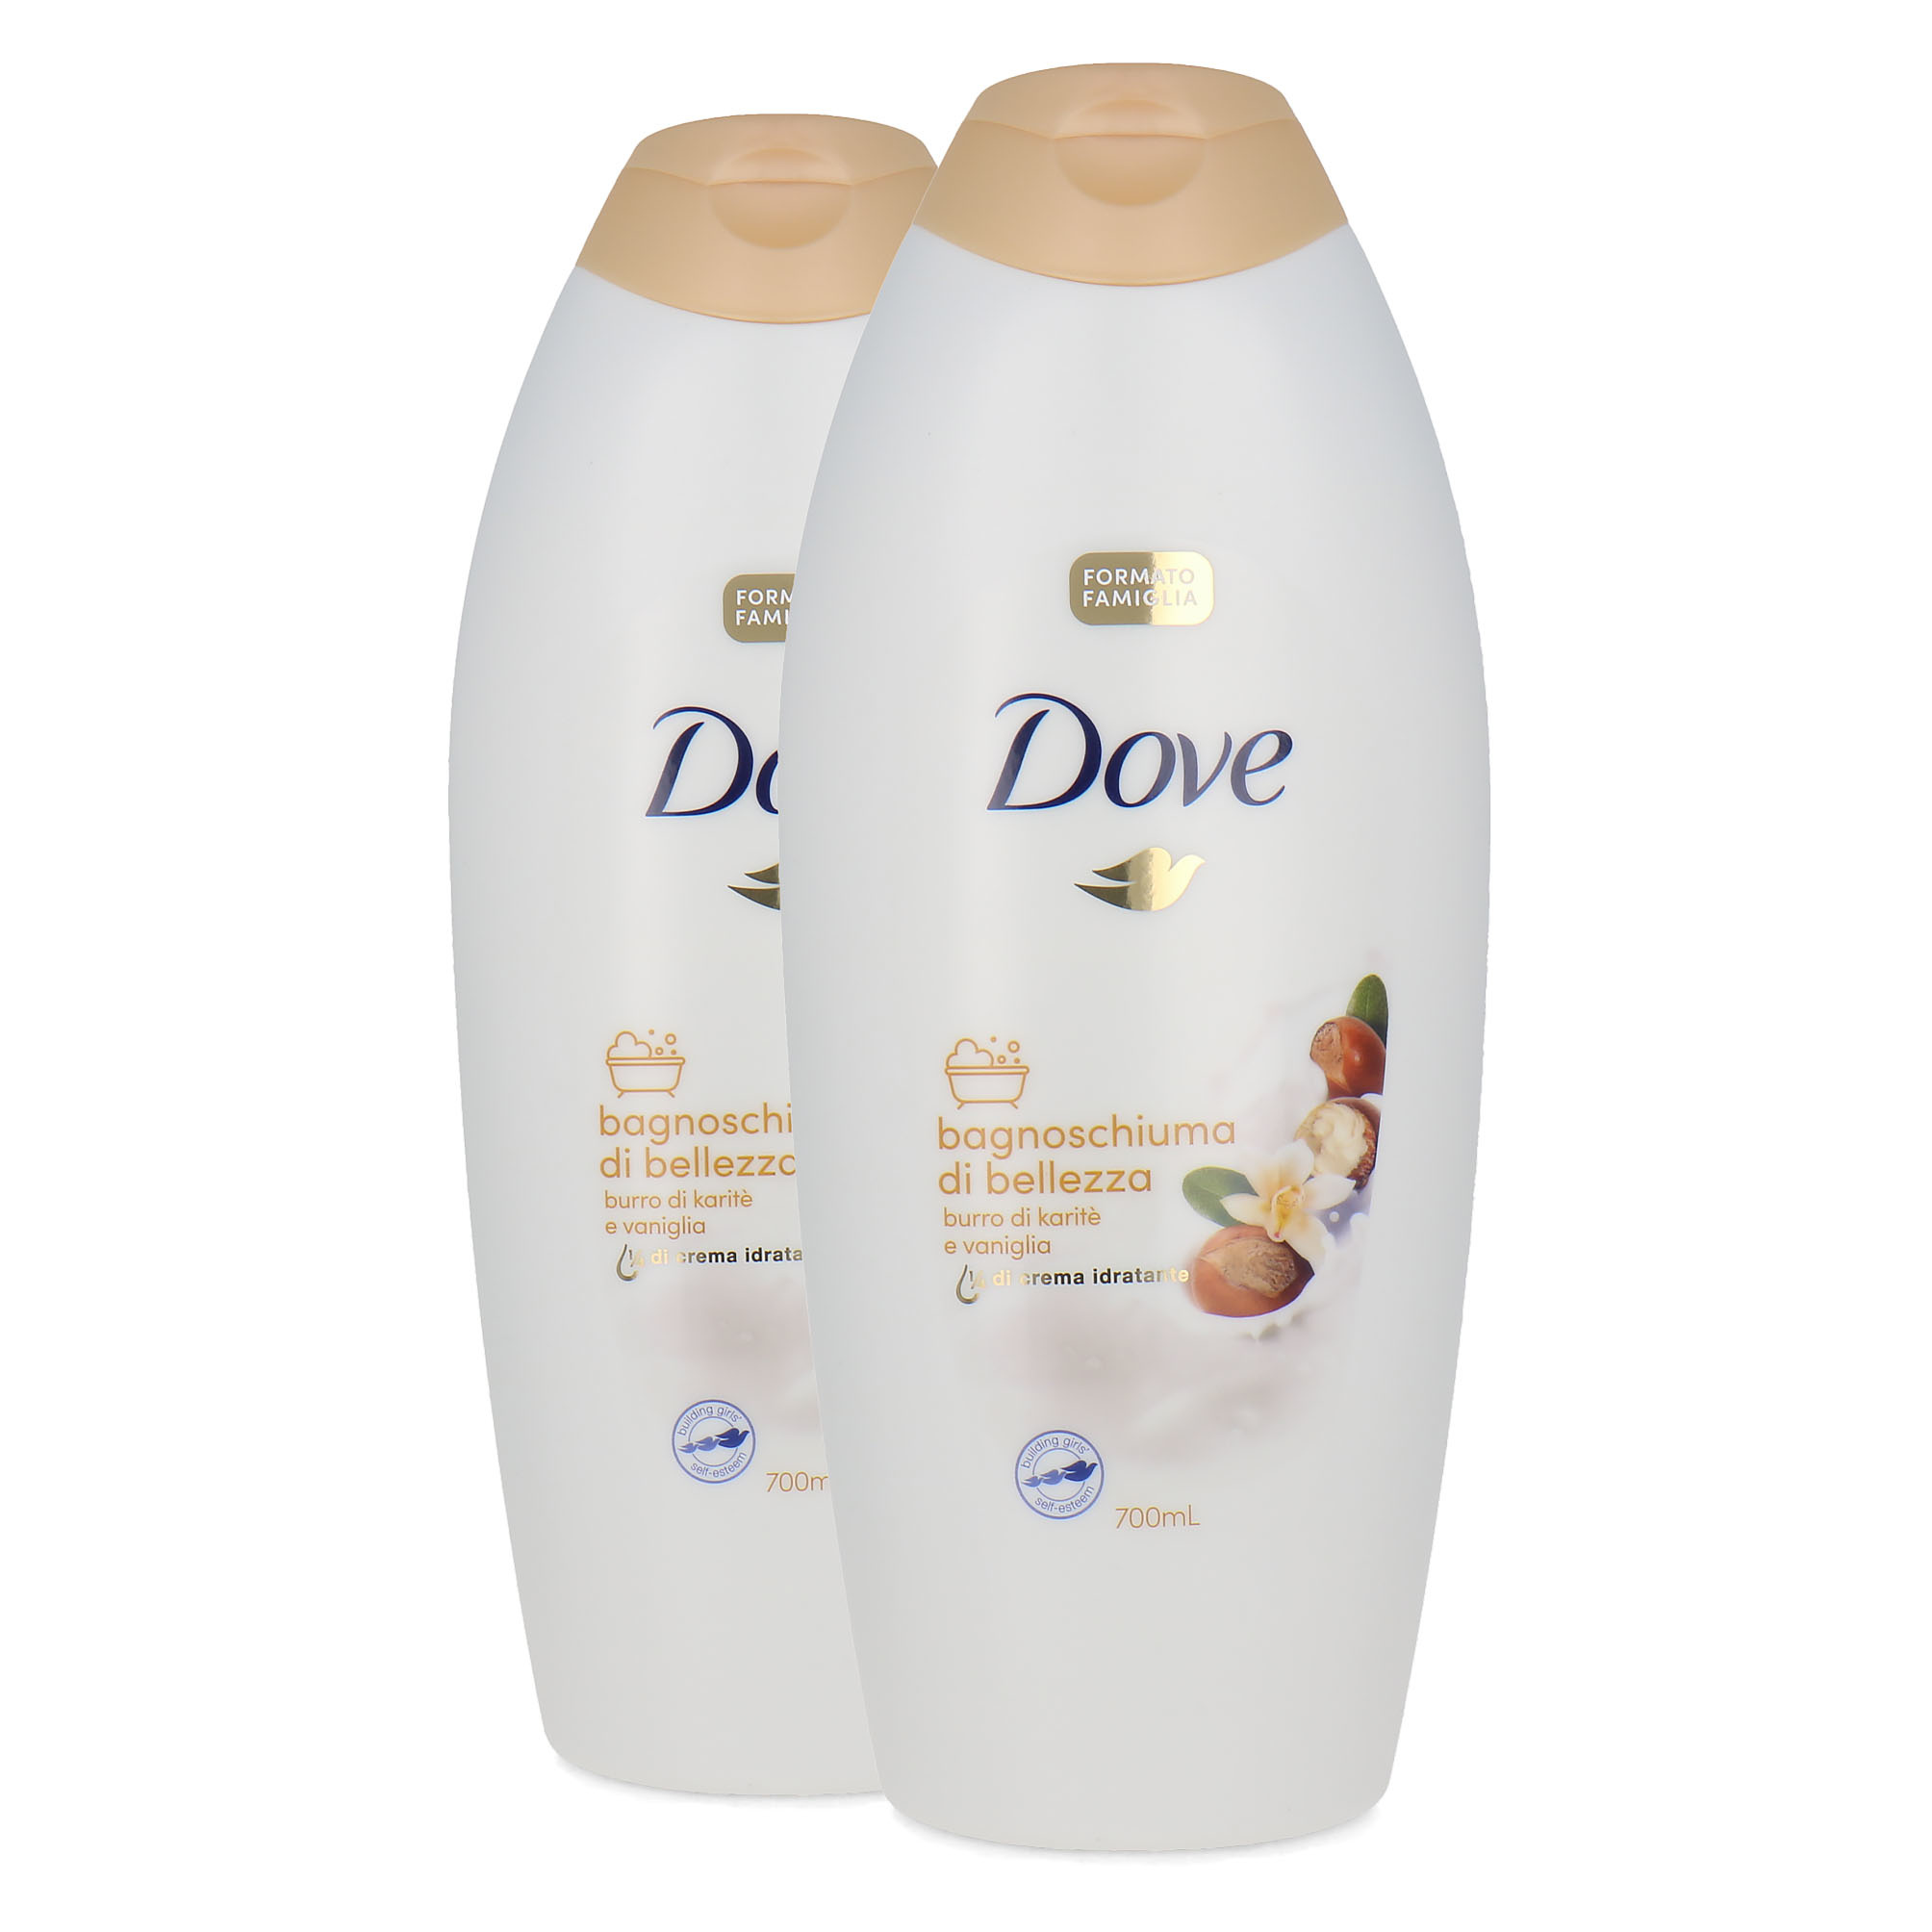 Dove Caring Bath 2 stuks à 700 ml - Shea Butter And Vanilla (Texte italien)